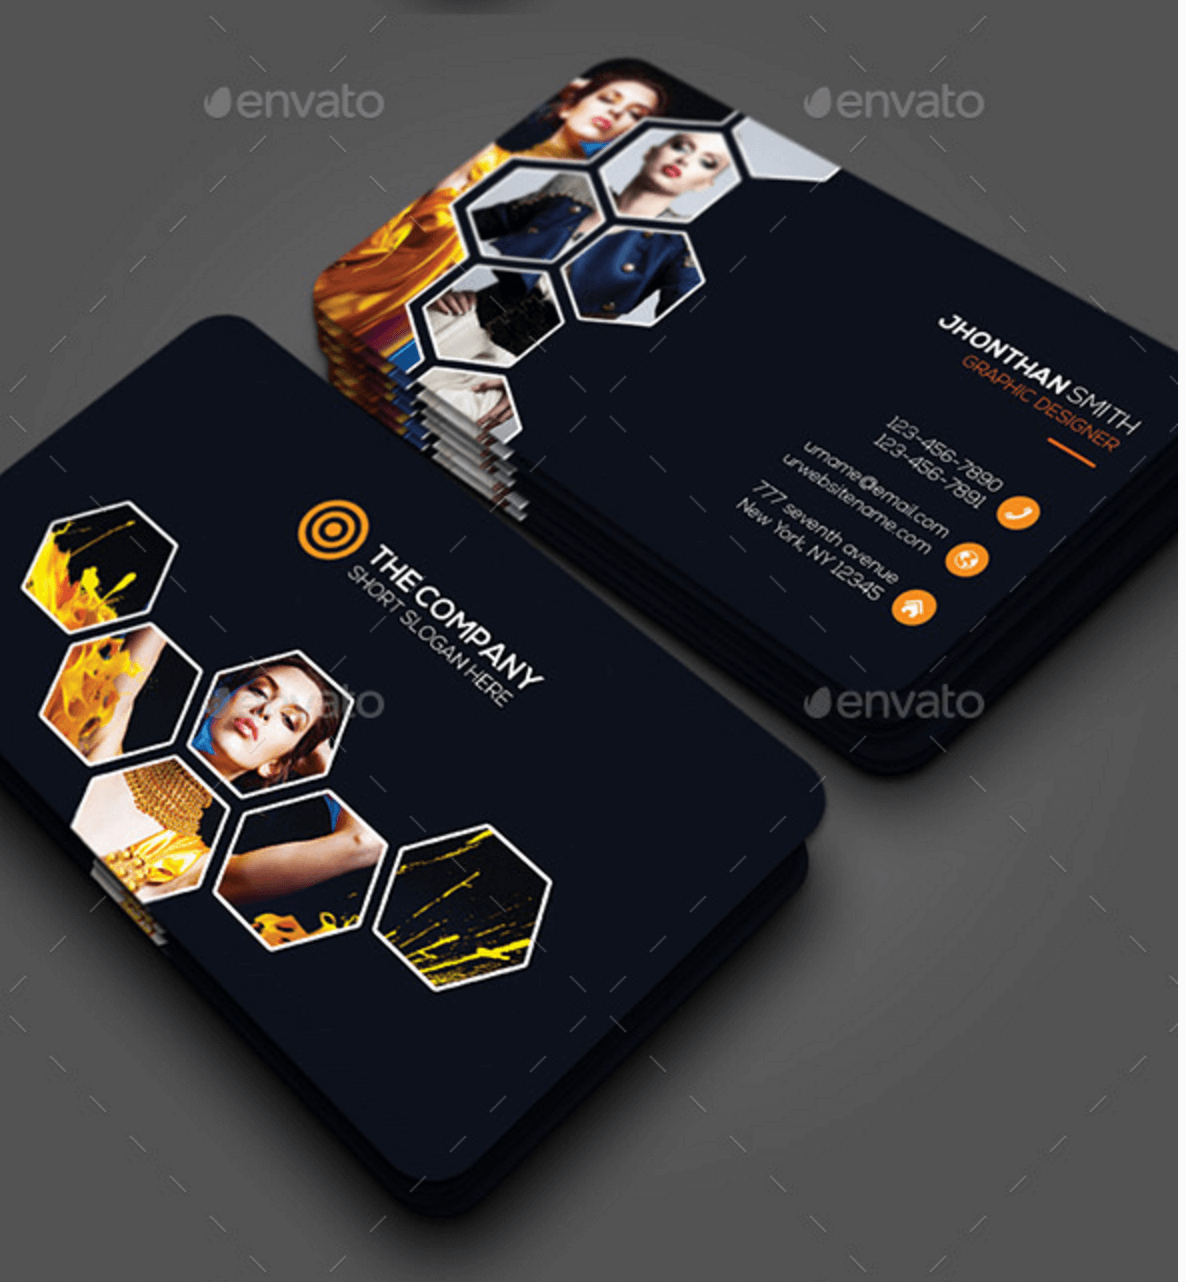 36 Free Printable Envato Business Card Templates Free Download in Photoshop by Envato Business Card Templates Free Download